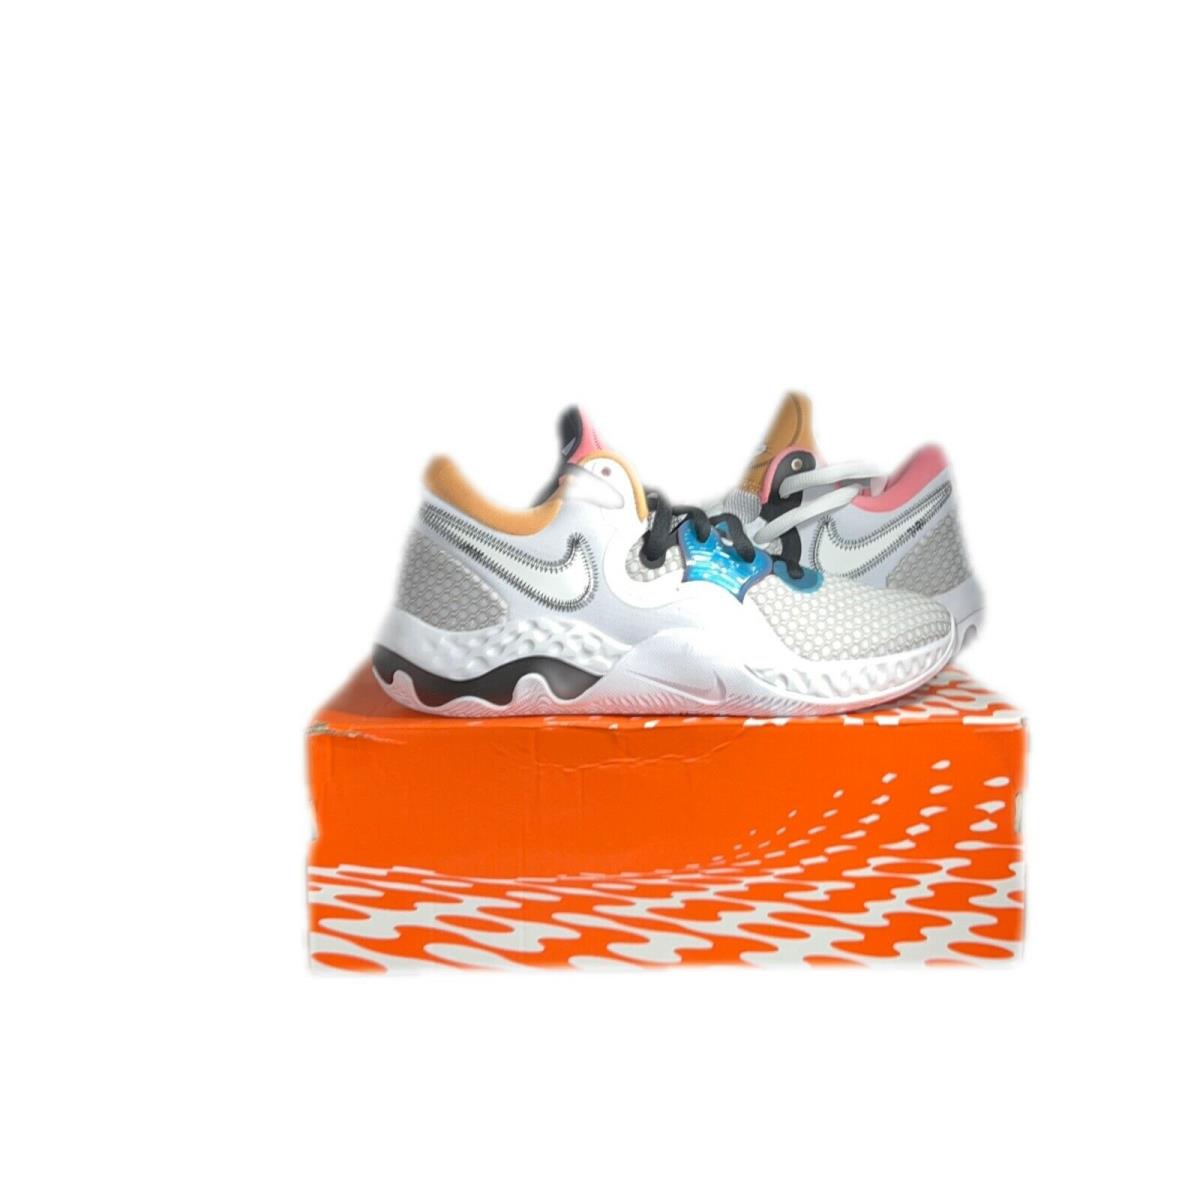 Nike Unisex Renew Elevate 2 CW3406 505 Multicolor Basketball Shoes Sz M 9 W 10.5 - Multicolor